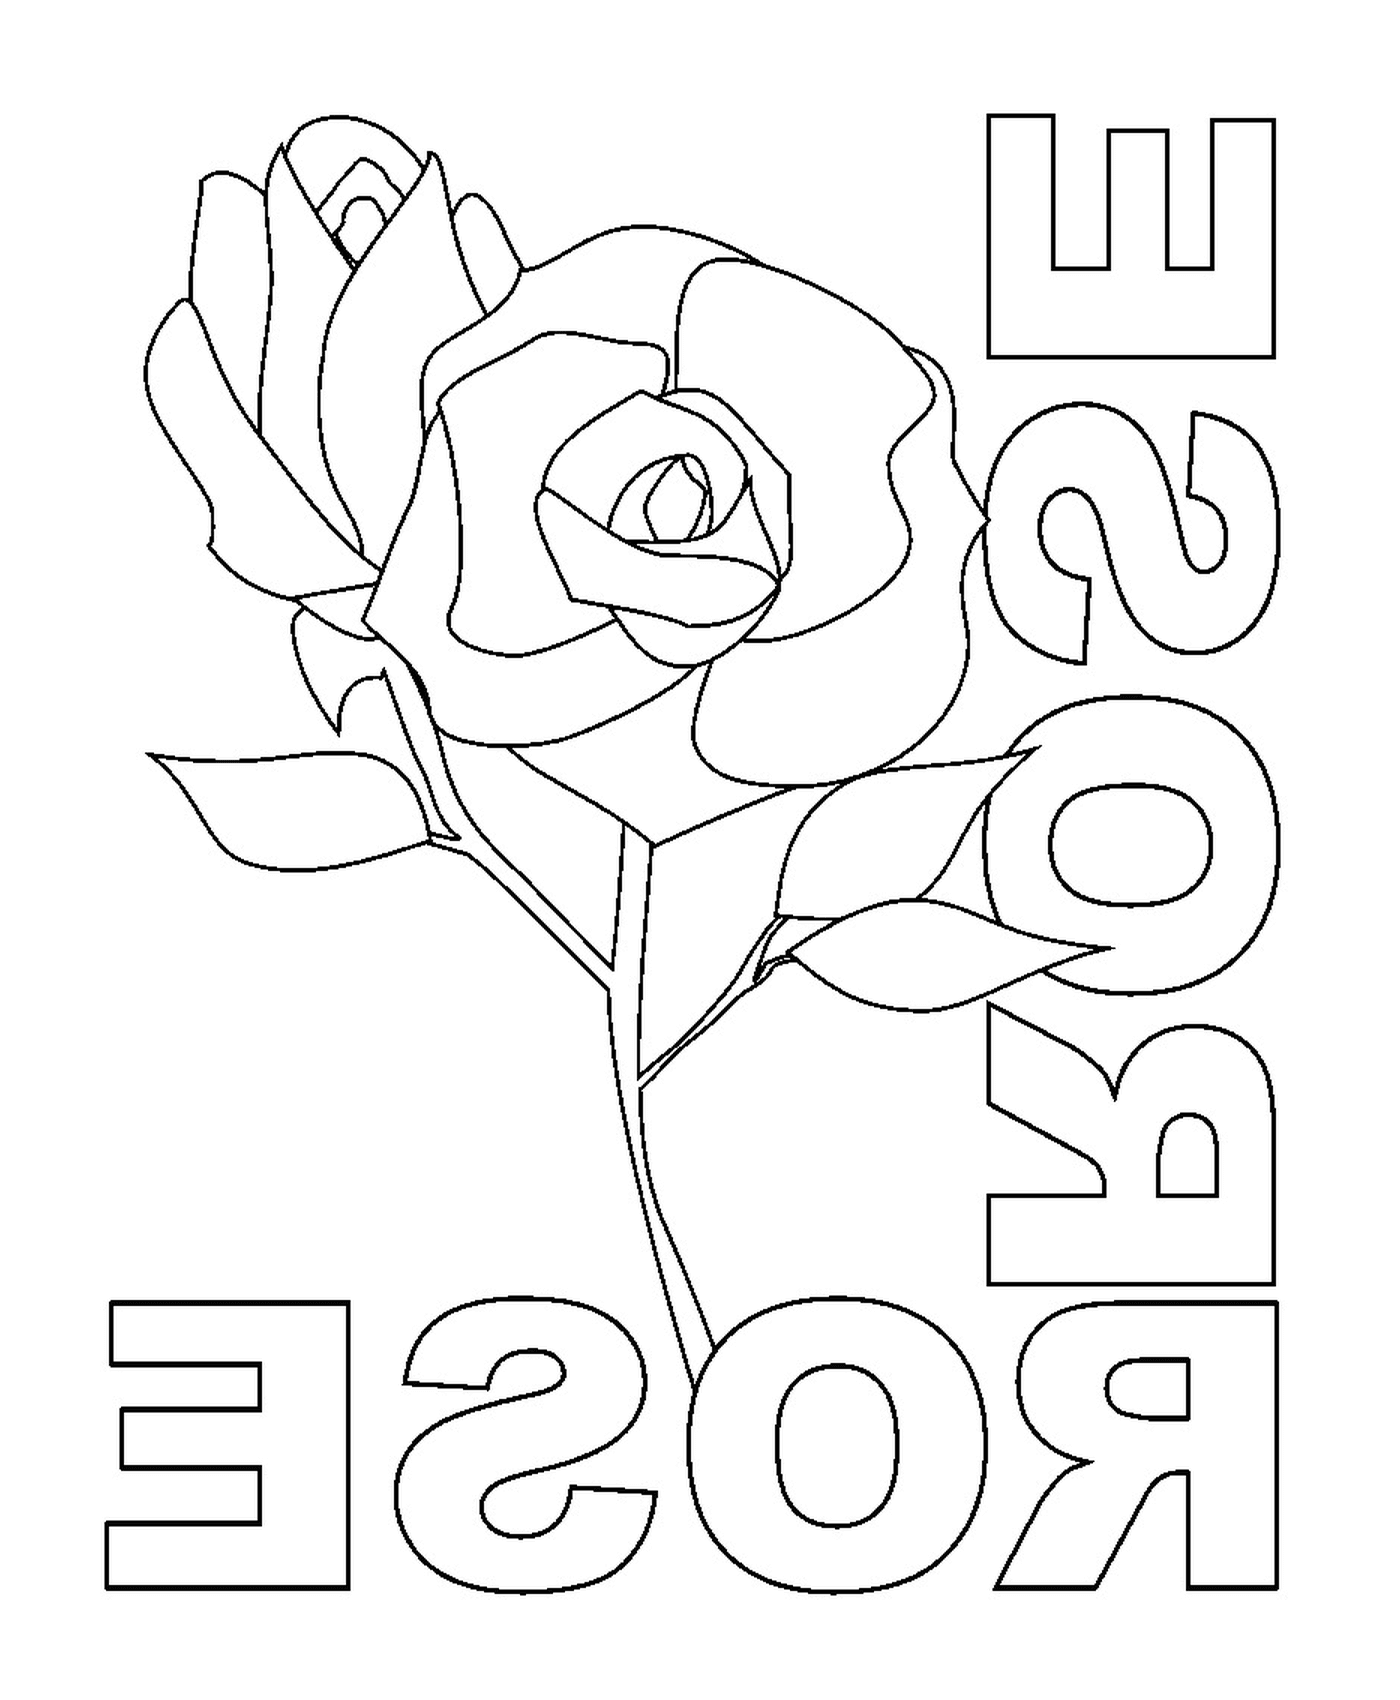   Rose rose charmante 